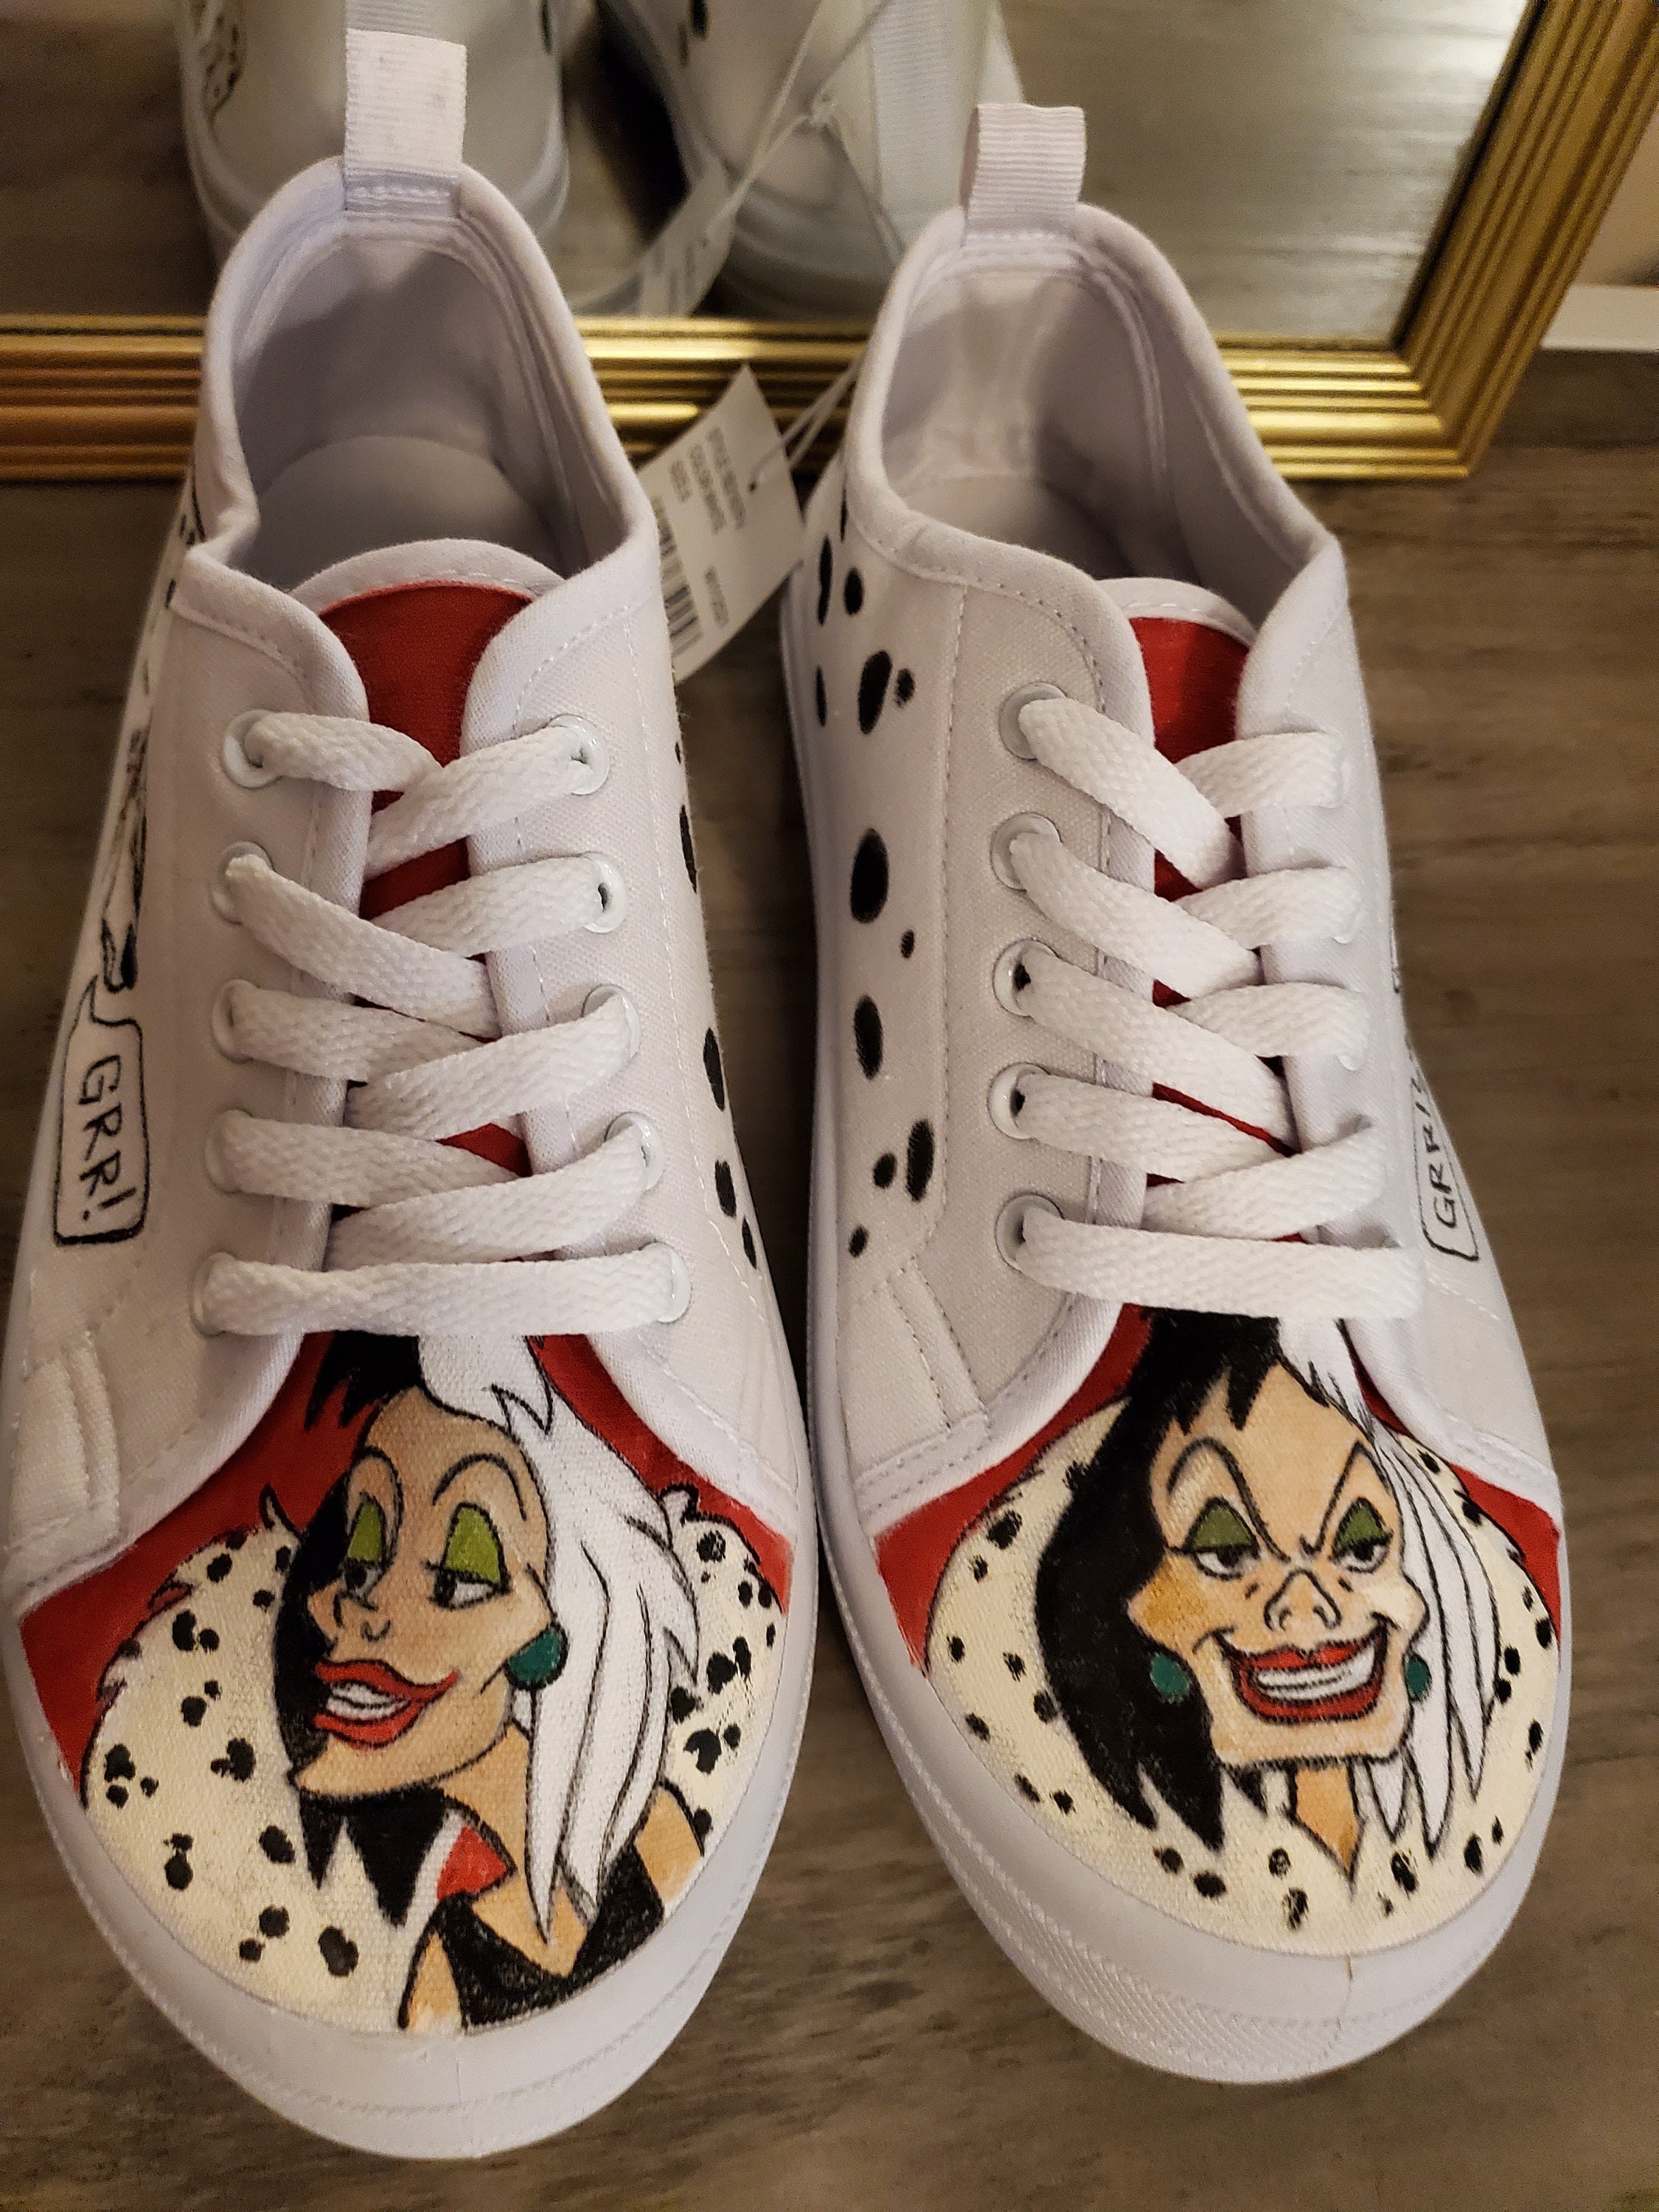 Cruella De Vil's shoes by e1venbeauty on DeviantArt